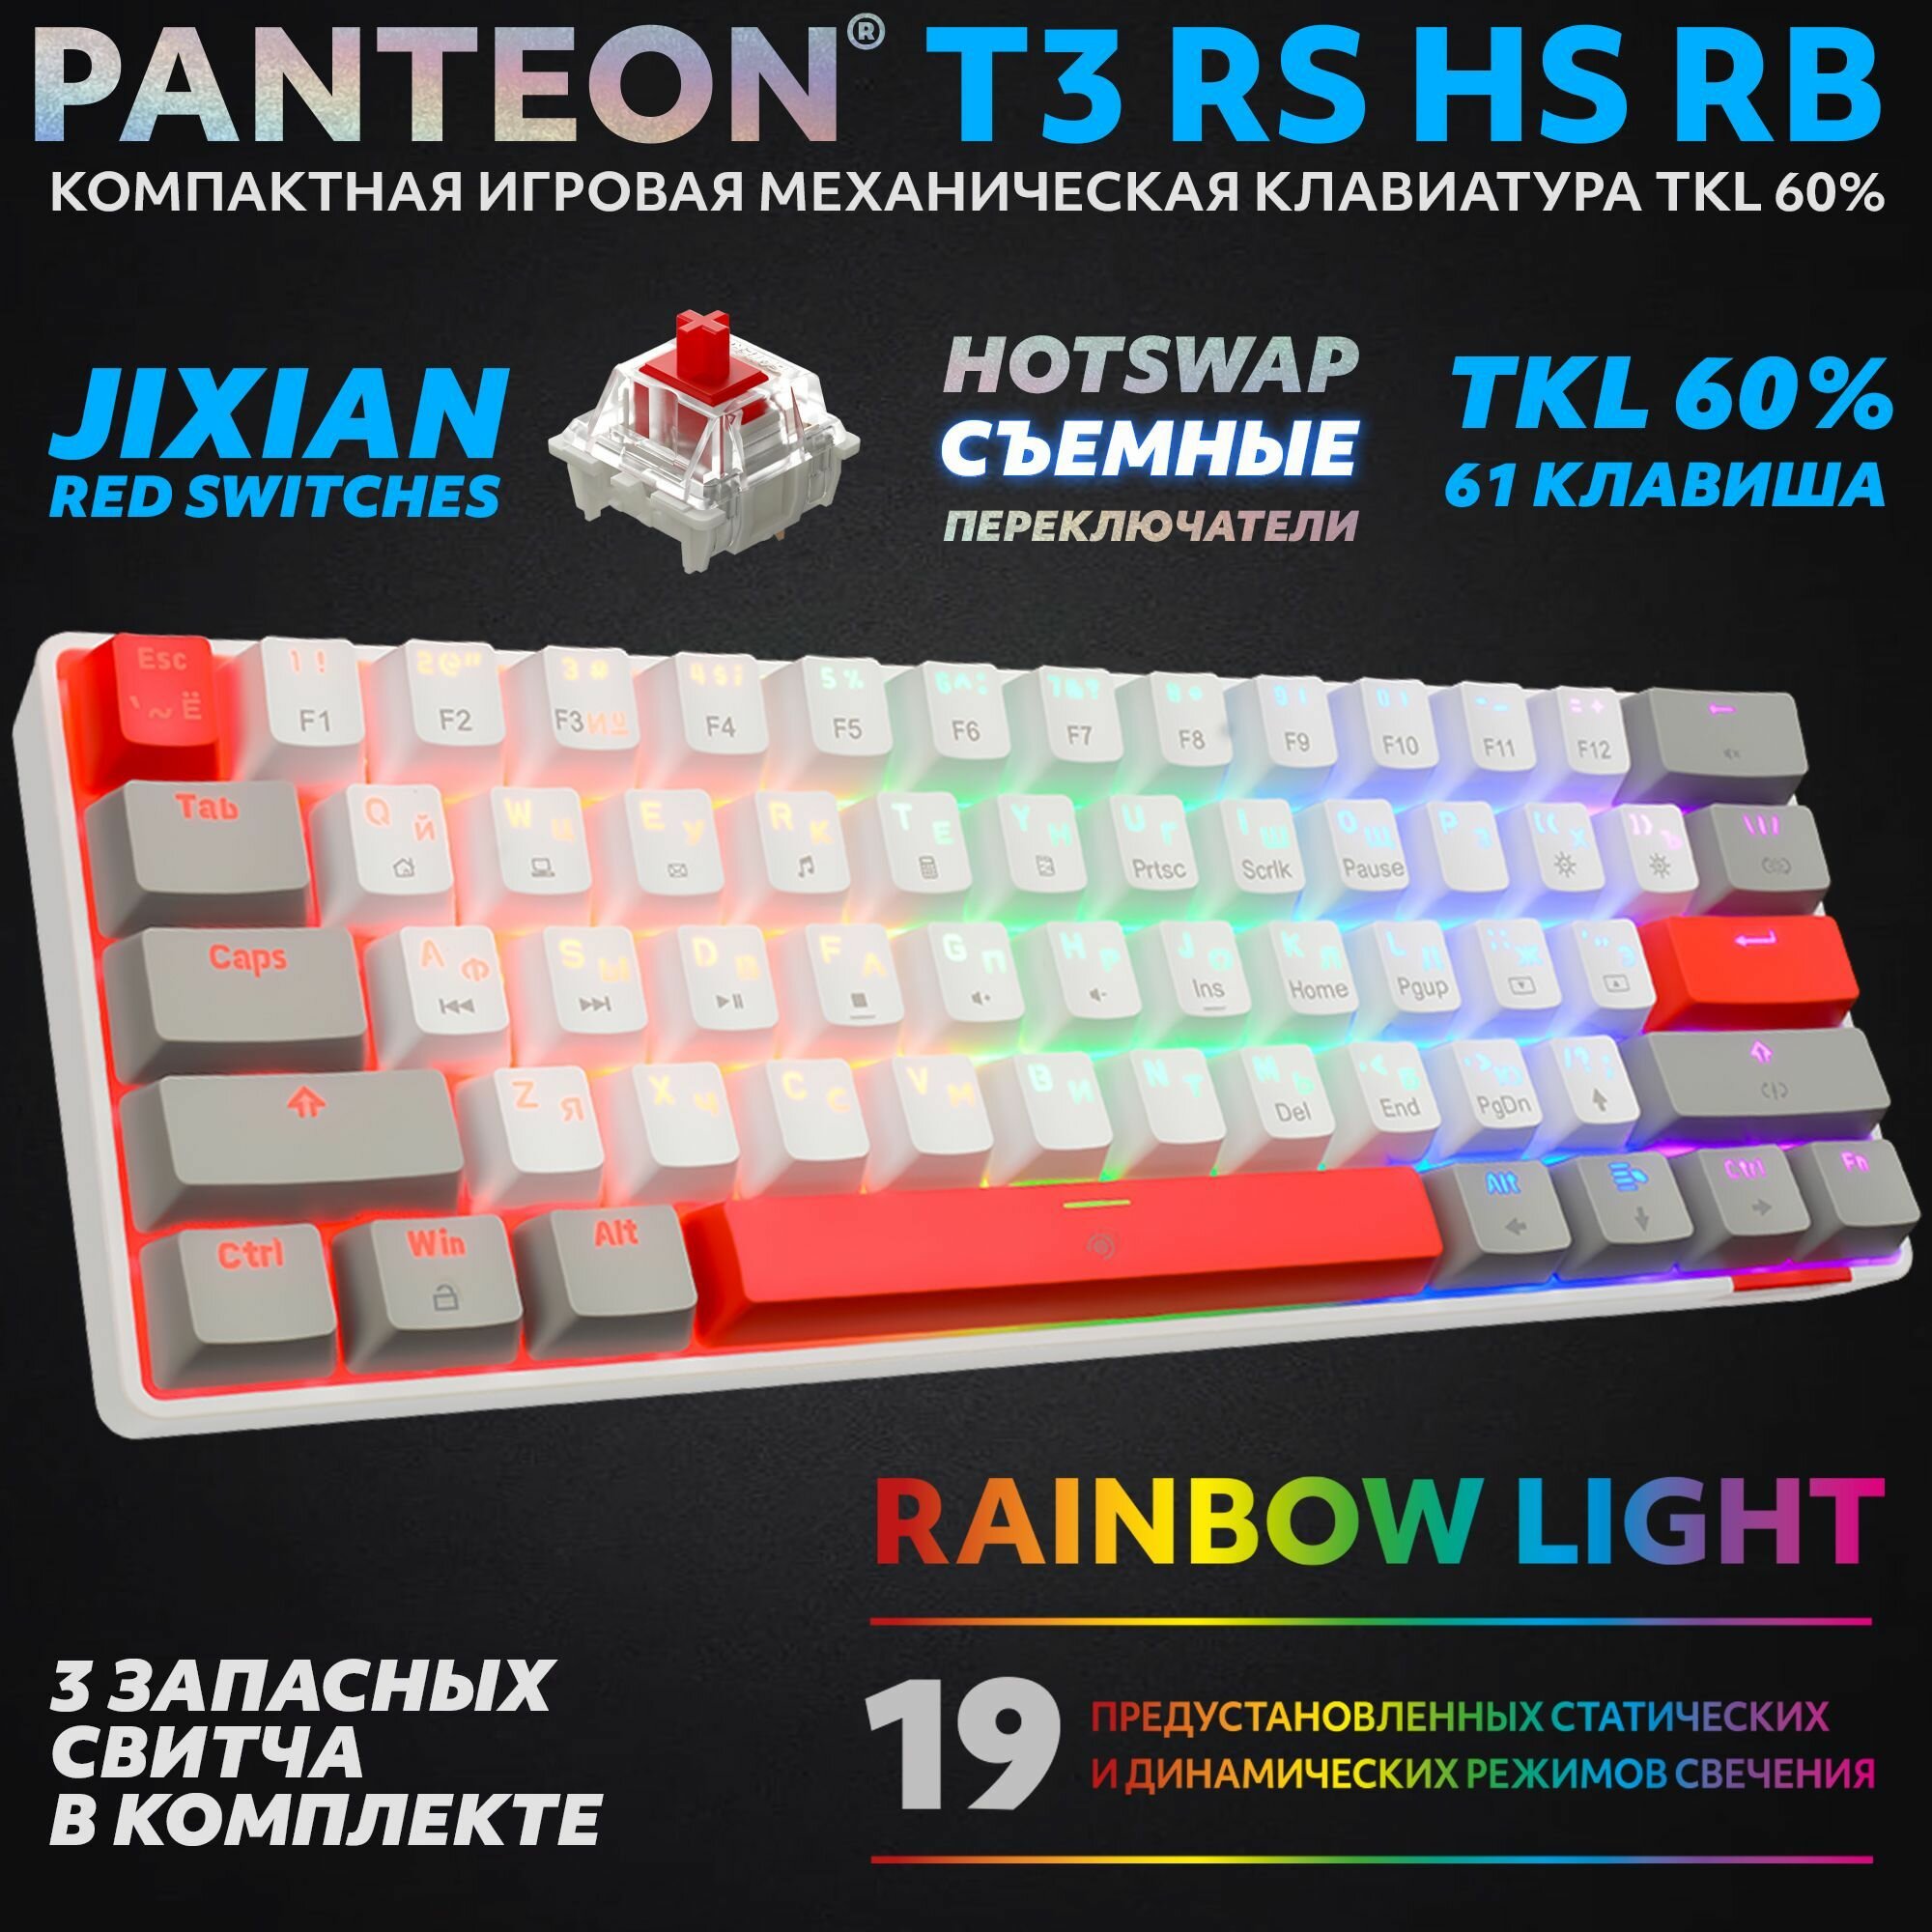 PANTEON T3 RS HS RB White-Grey (37) Механическая клавиатура (TKL 60%, подсветка LED RAINBOW, Jixian Red, 61 кл., HotSwap, USB),цвет: белый-серый (37)